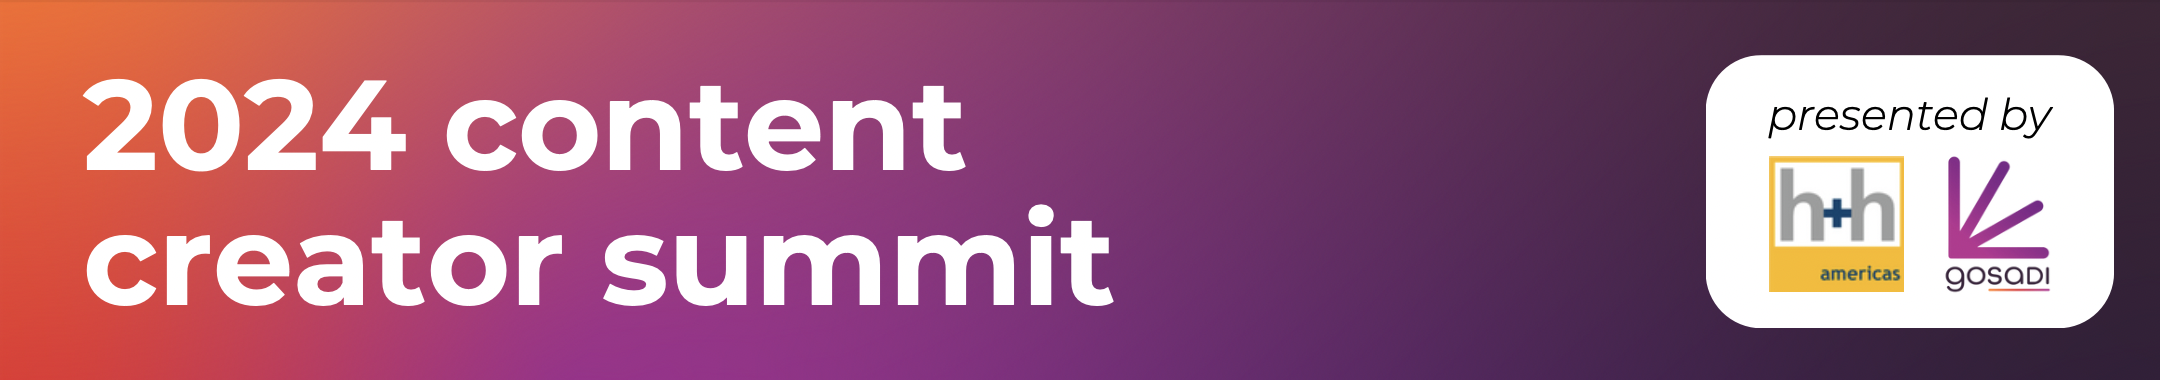 2024 content creator summit presented by h+h Americas & gosadi